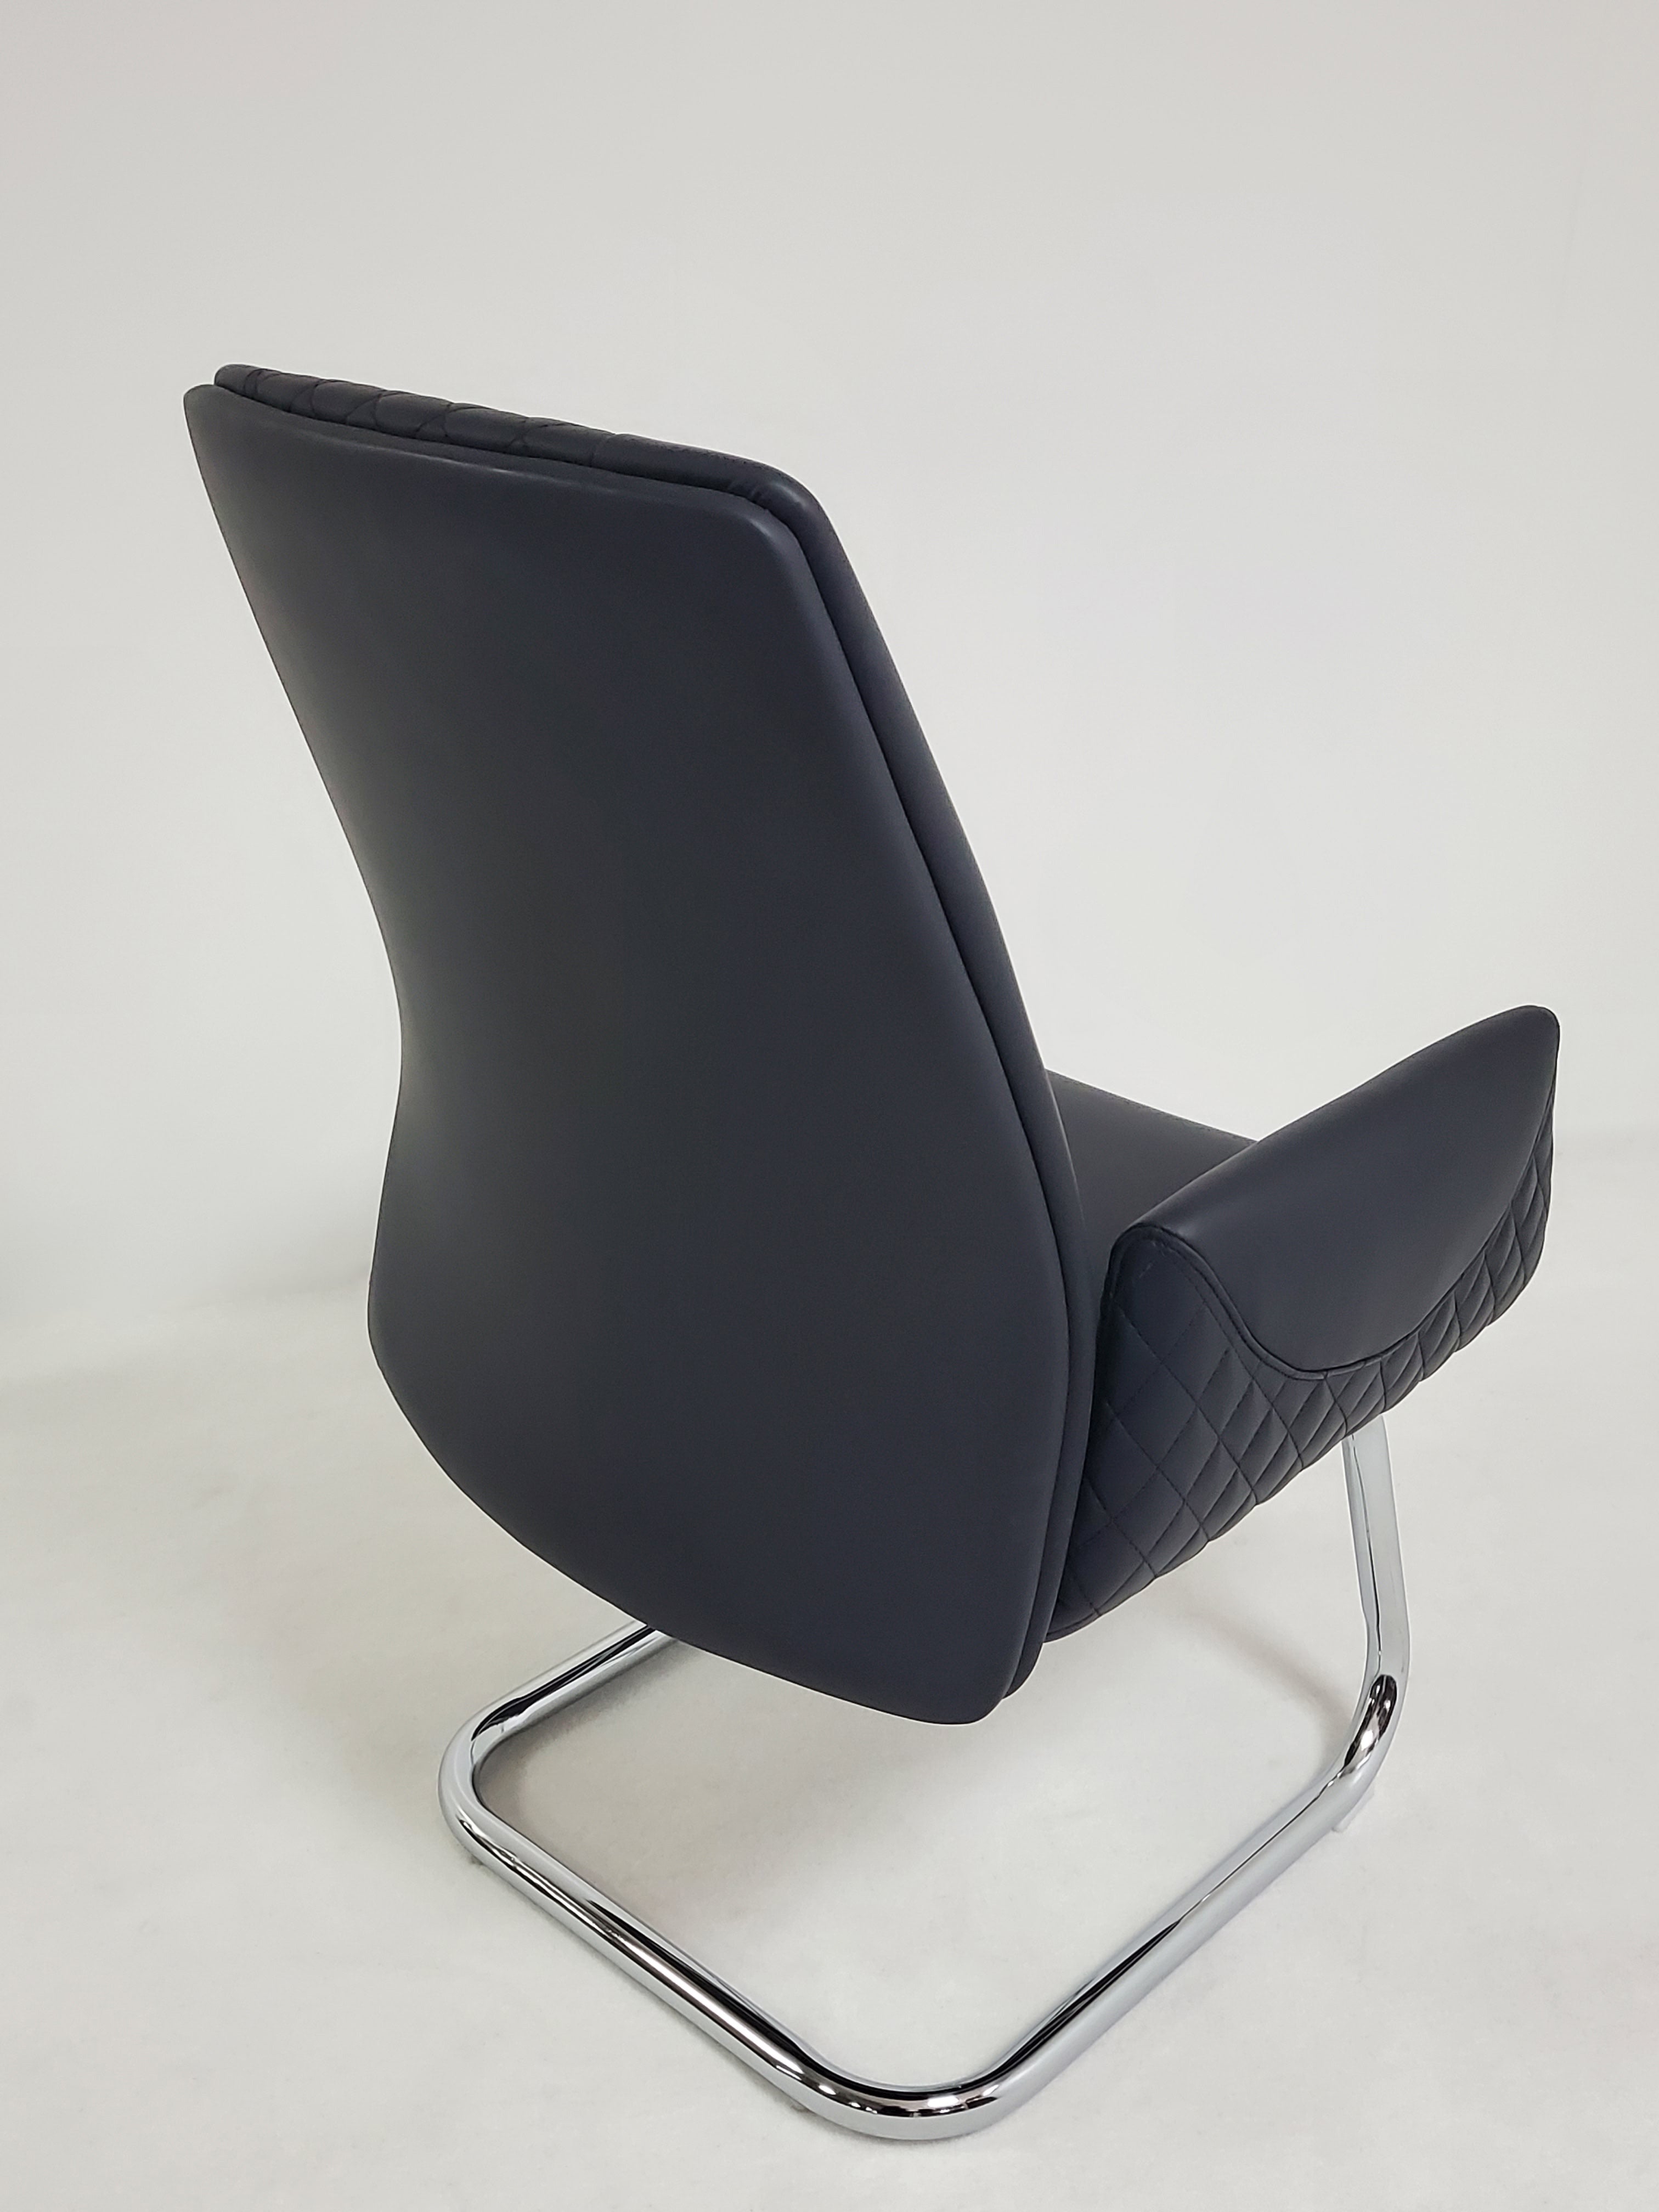 Modern Black Leather Meeting Room Chair - DL205C